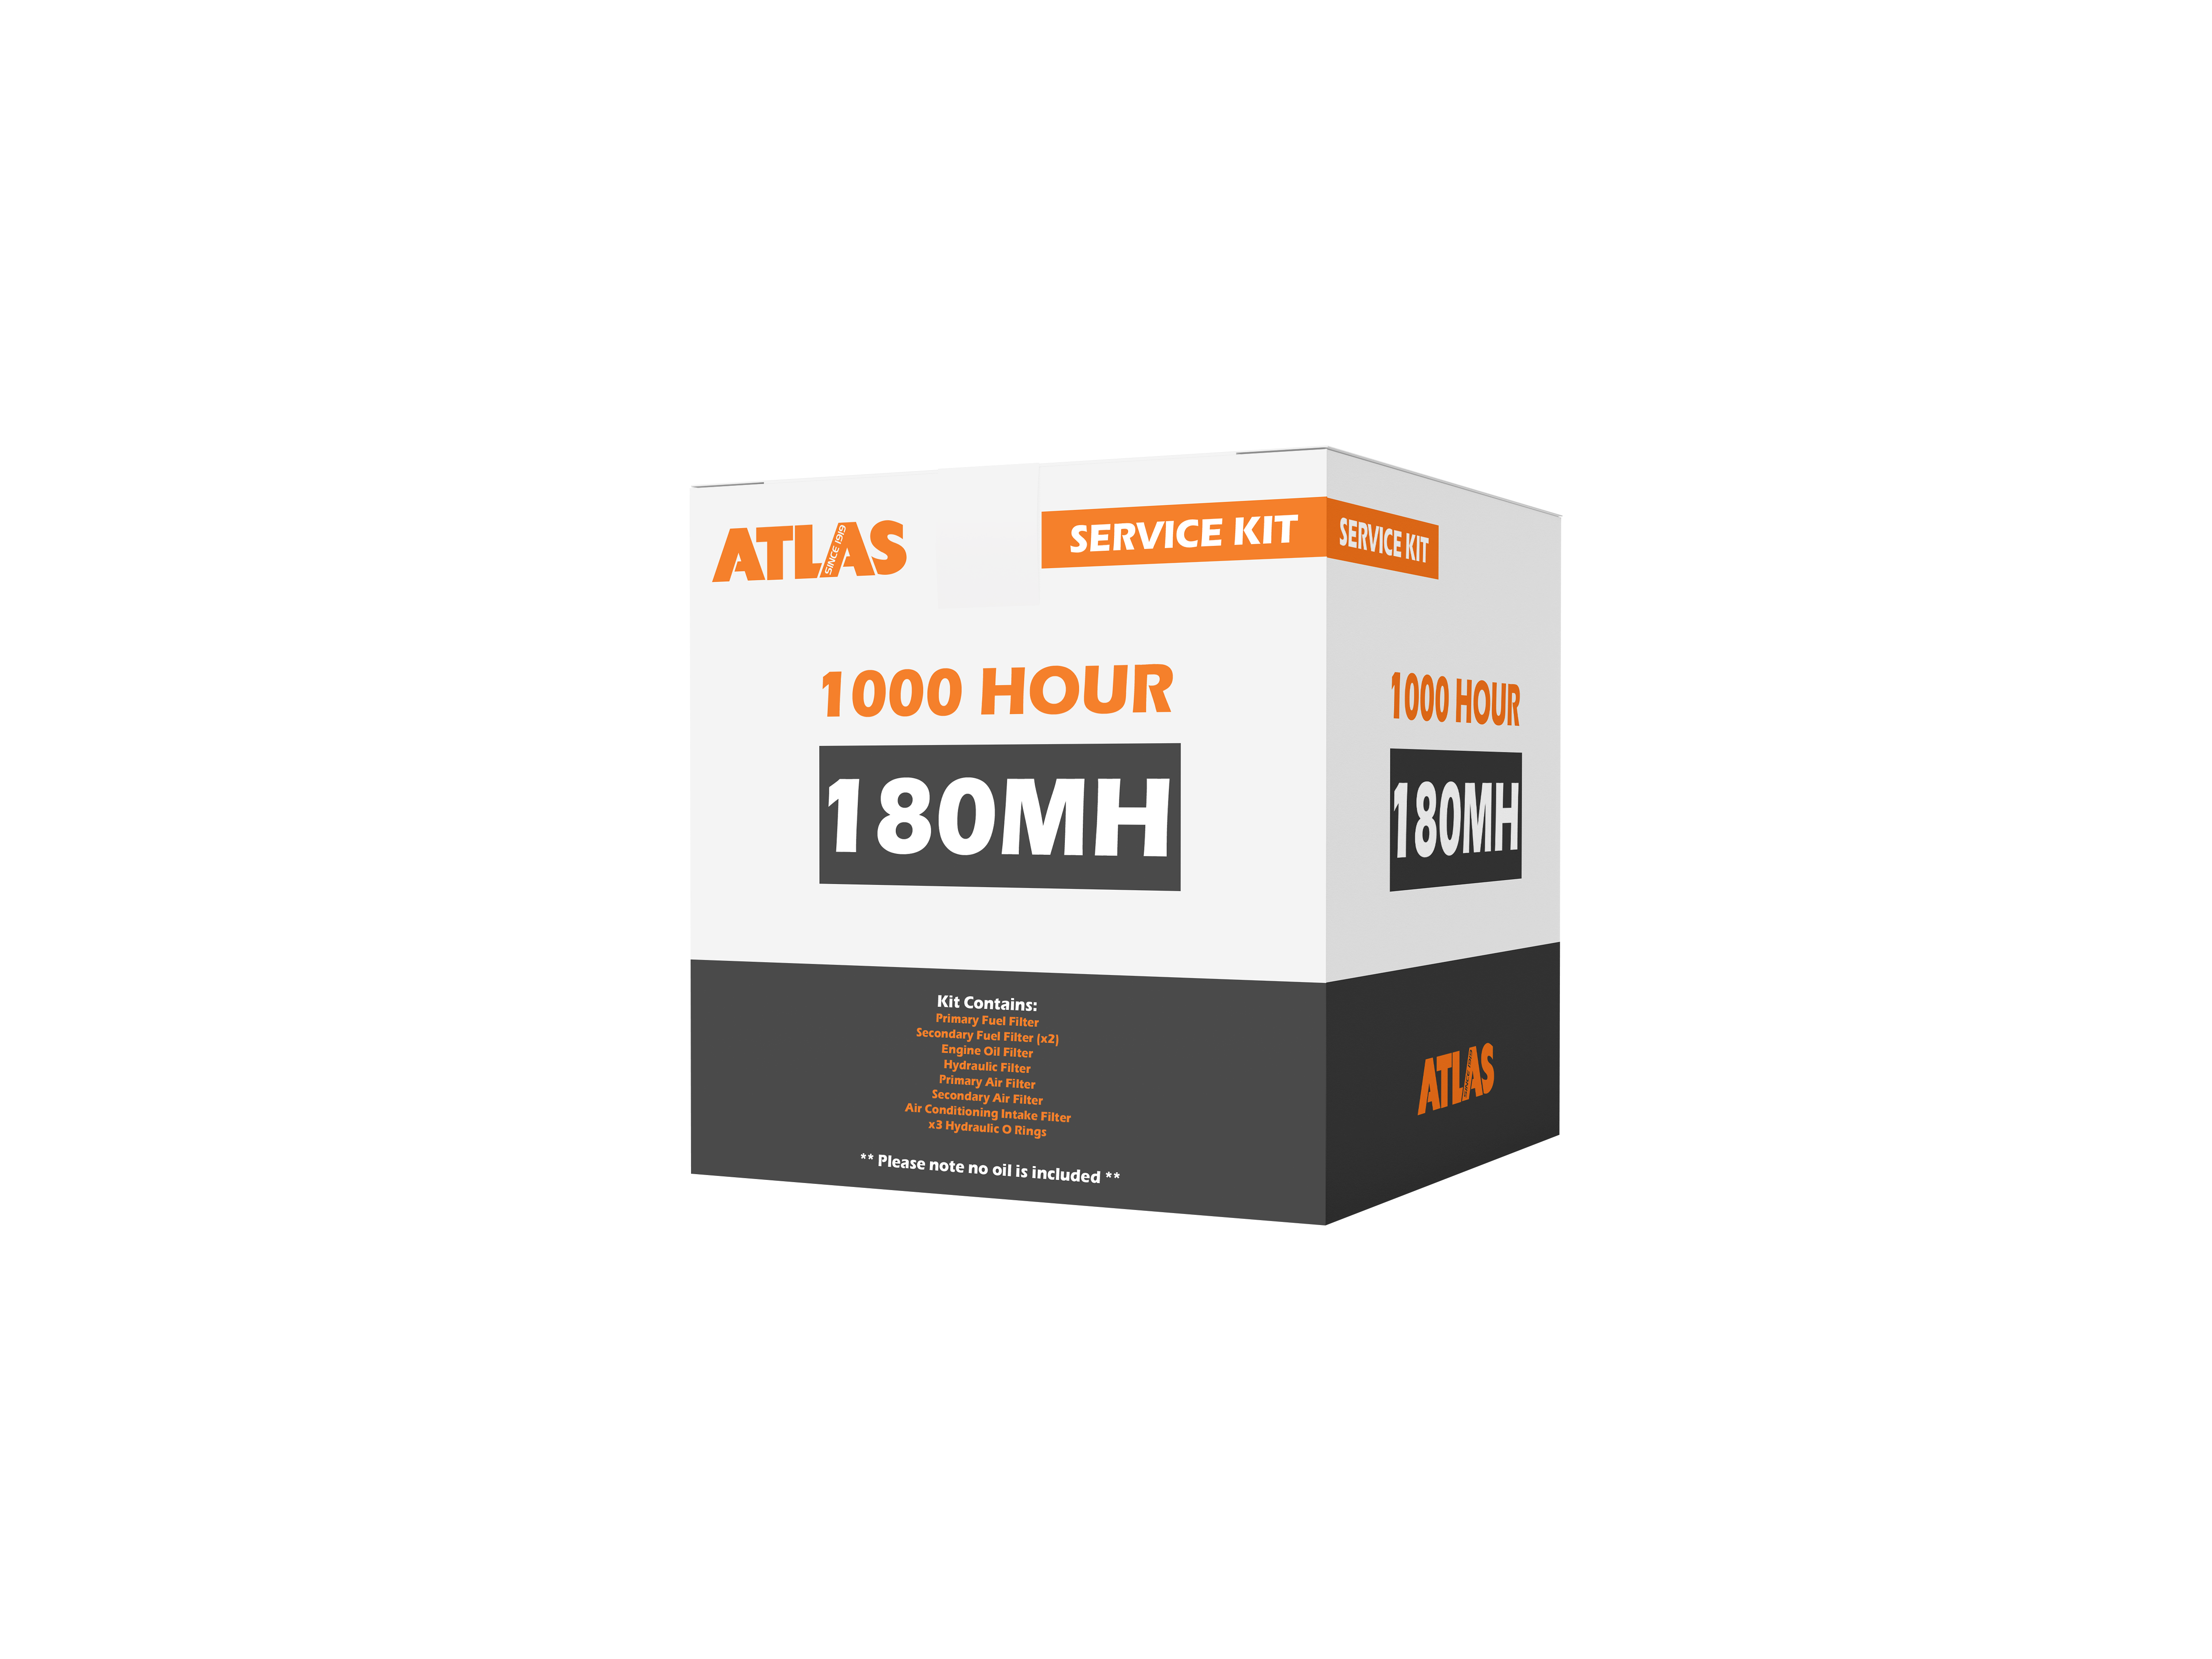 Atlas 180MH 1000 Hour Service Kit